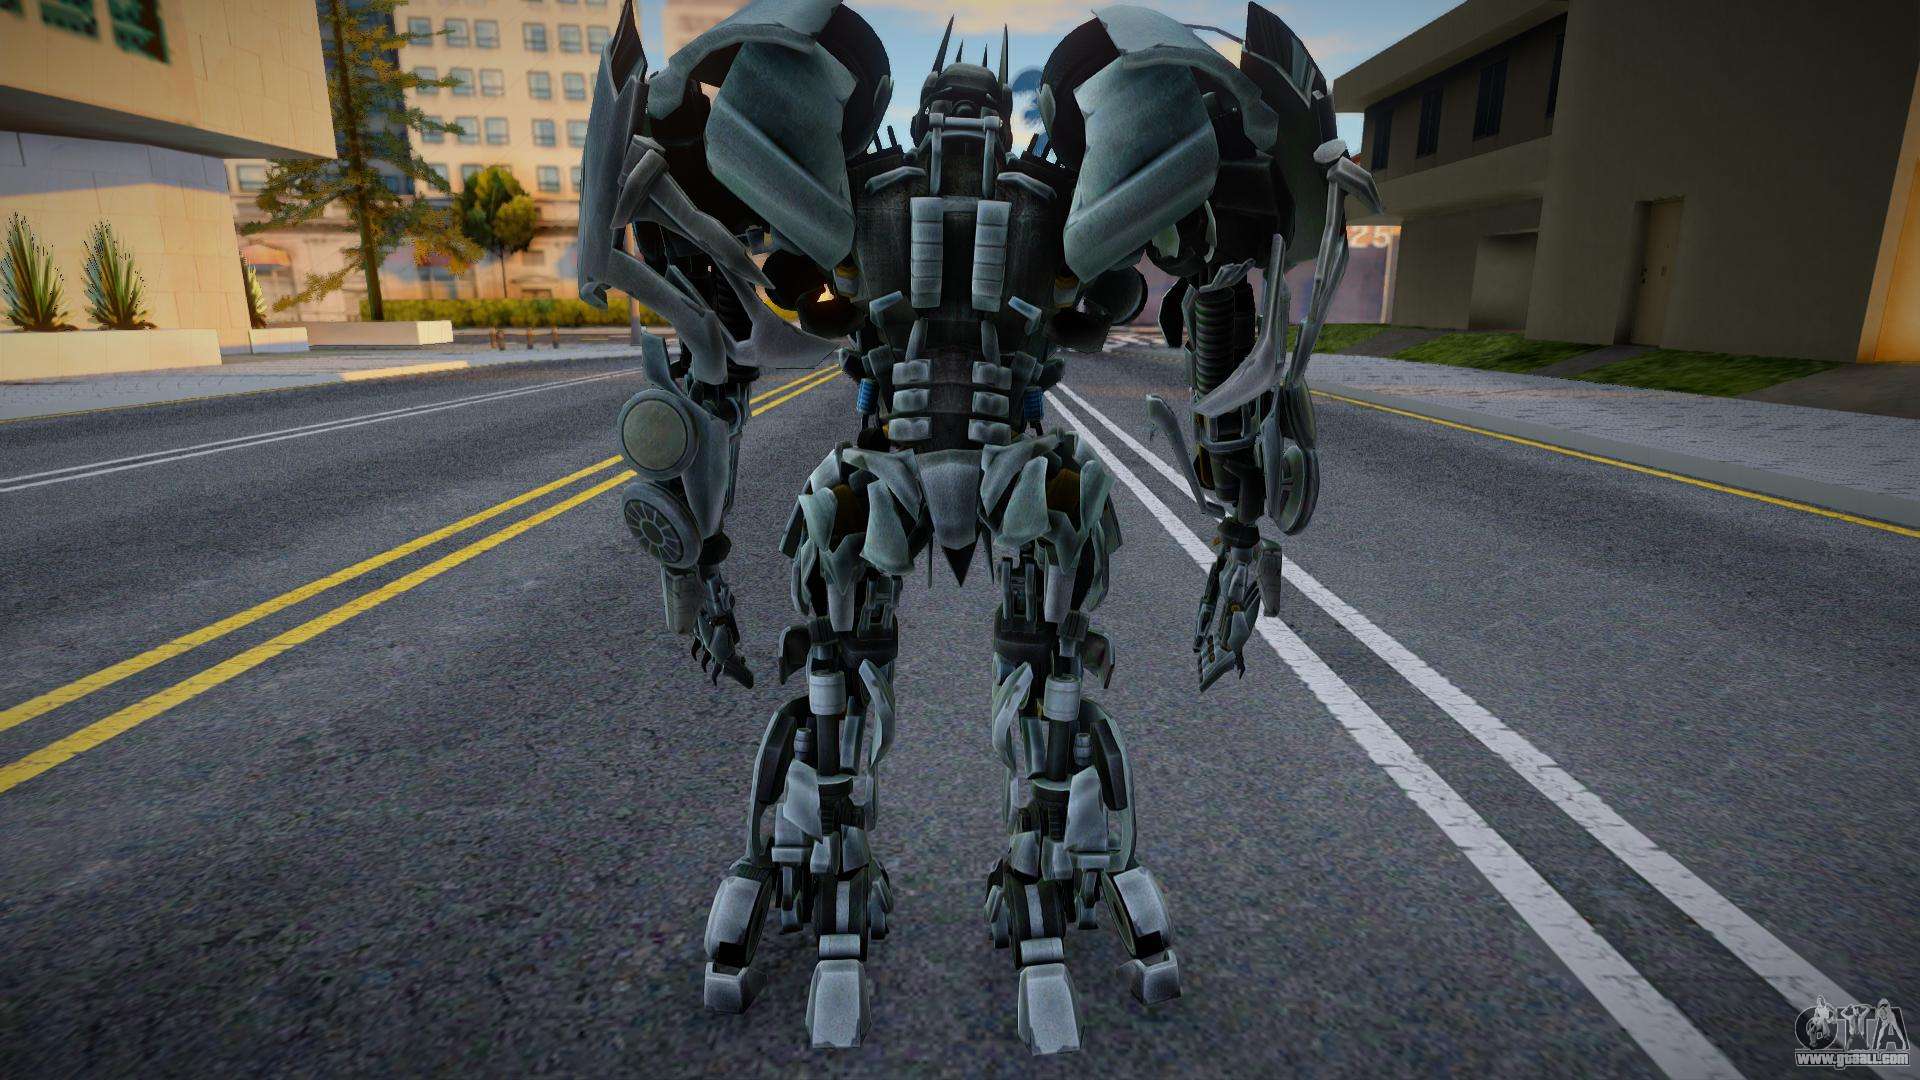 Gen 1 Soundwave [Transformers: Prime - The Game] [Mods]